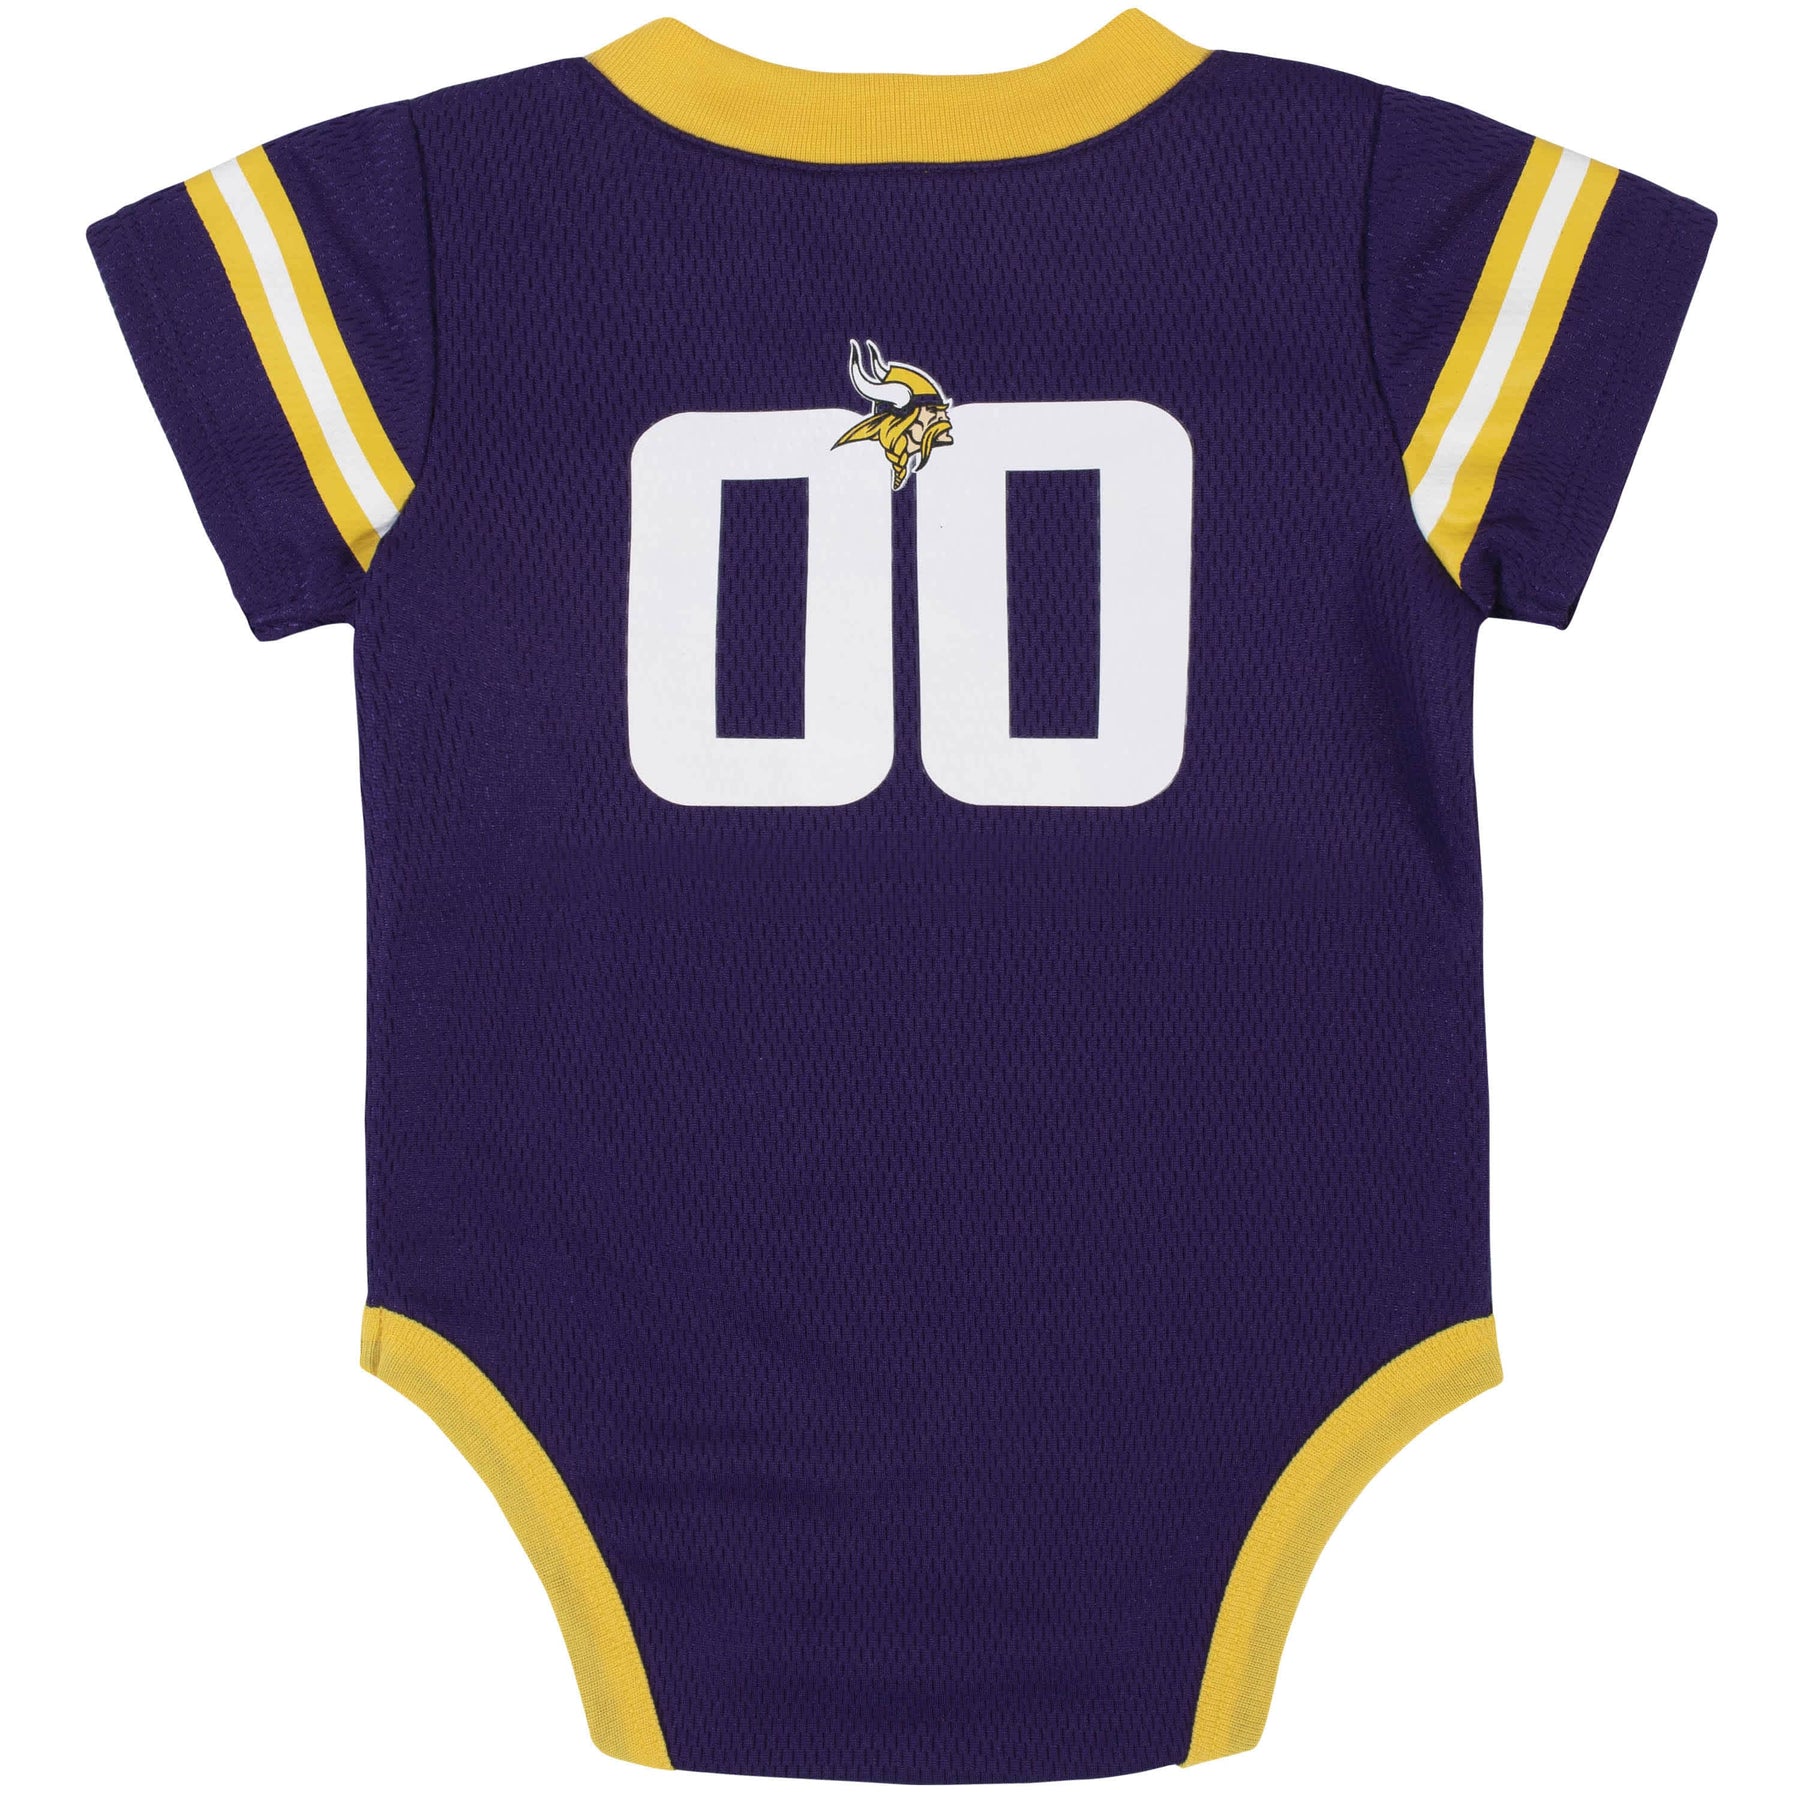 NFL Infant Boys’ 3-Pack Short-Sleeve Bodysuits - Oakland Raiders